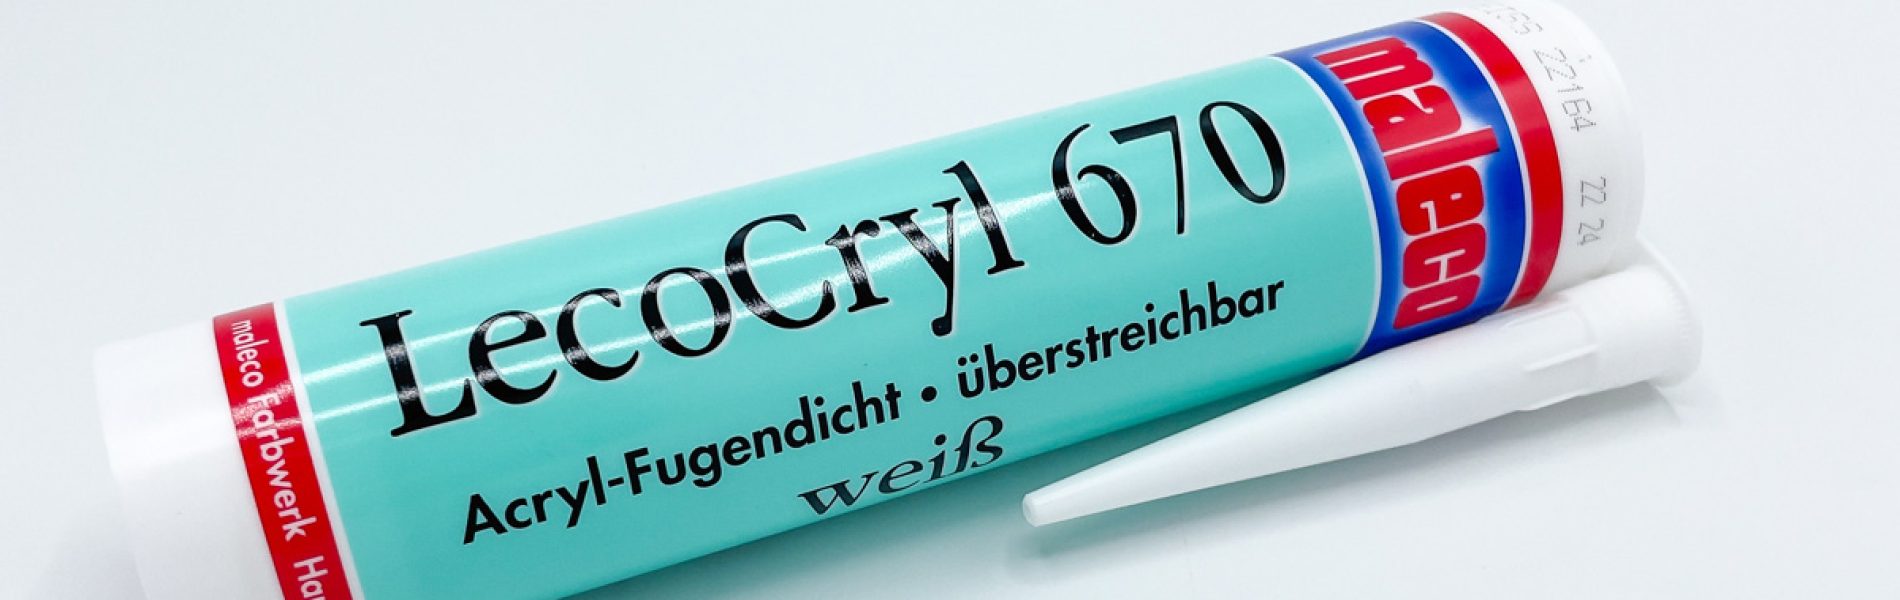 LecoCryl-670_web